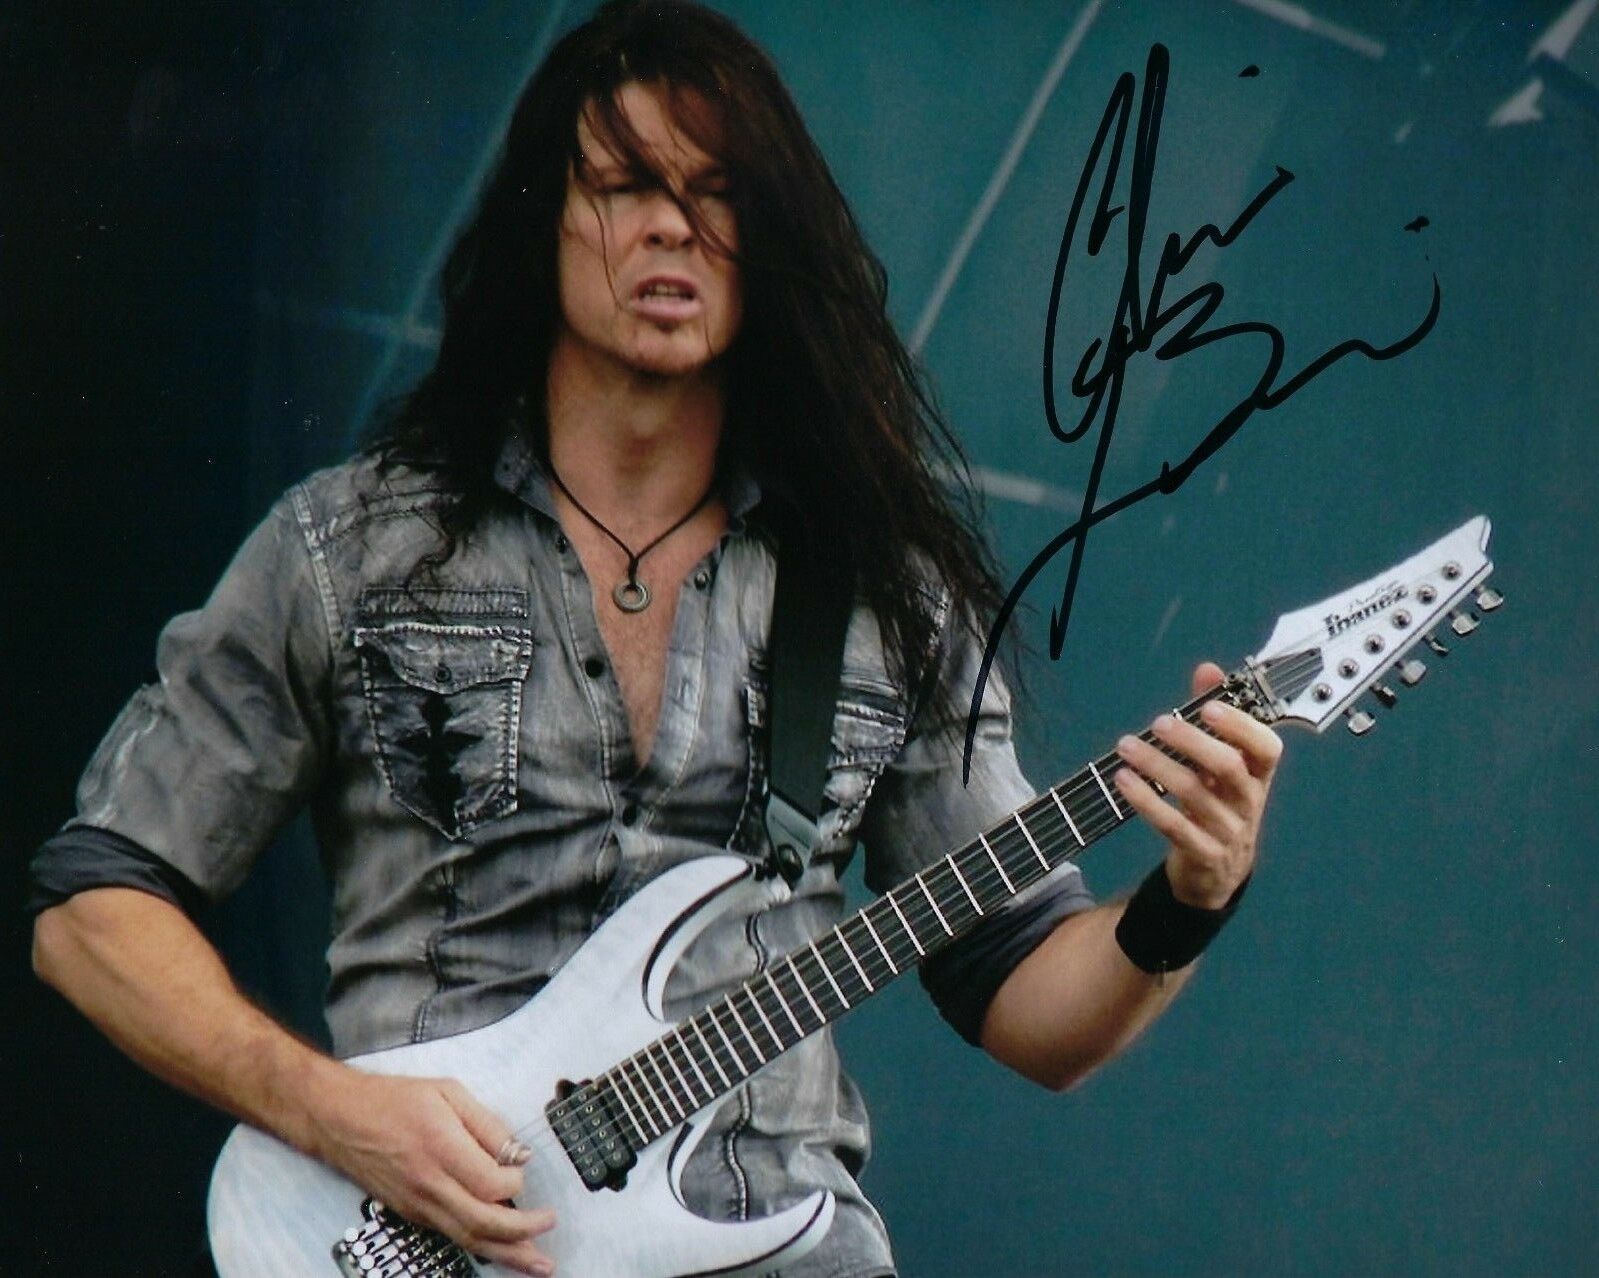 GFA Megadeth Guitarist * CHRIS BRODERICK * Signed Autographed 8x10 Photo Poster painting C1 COA